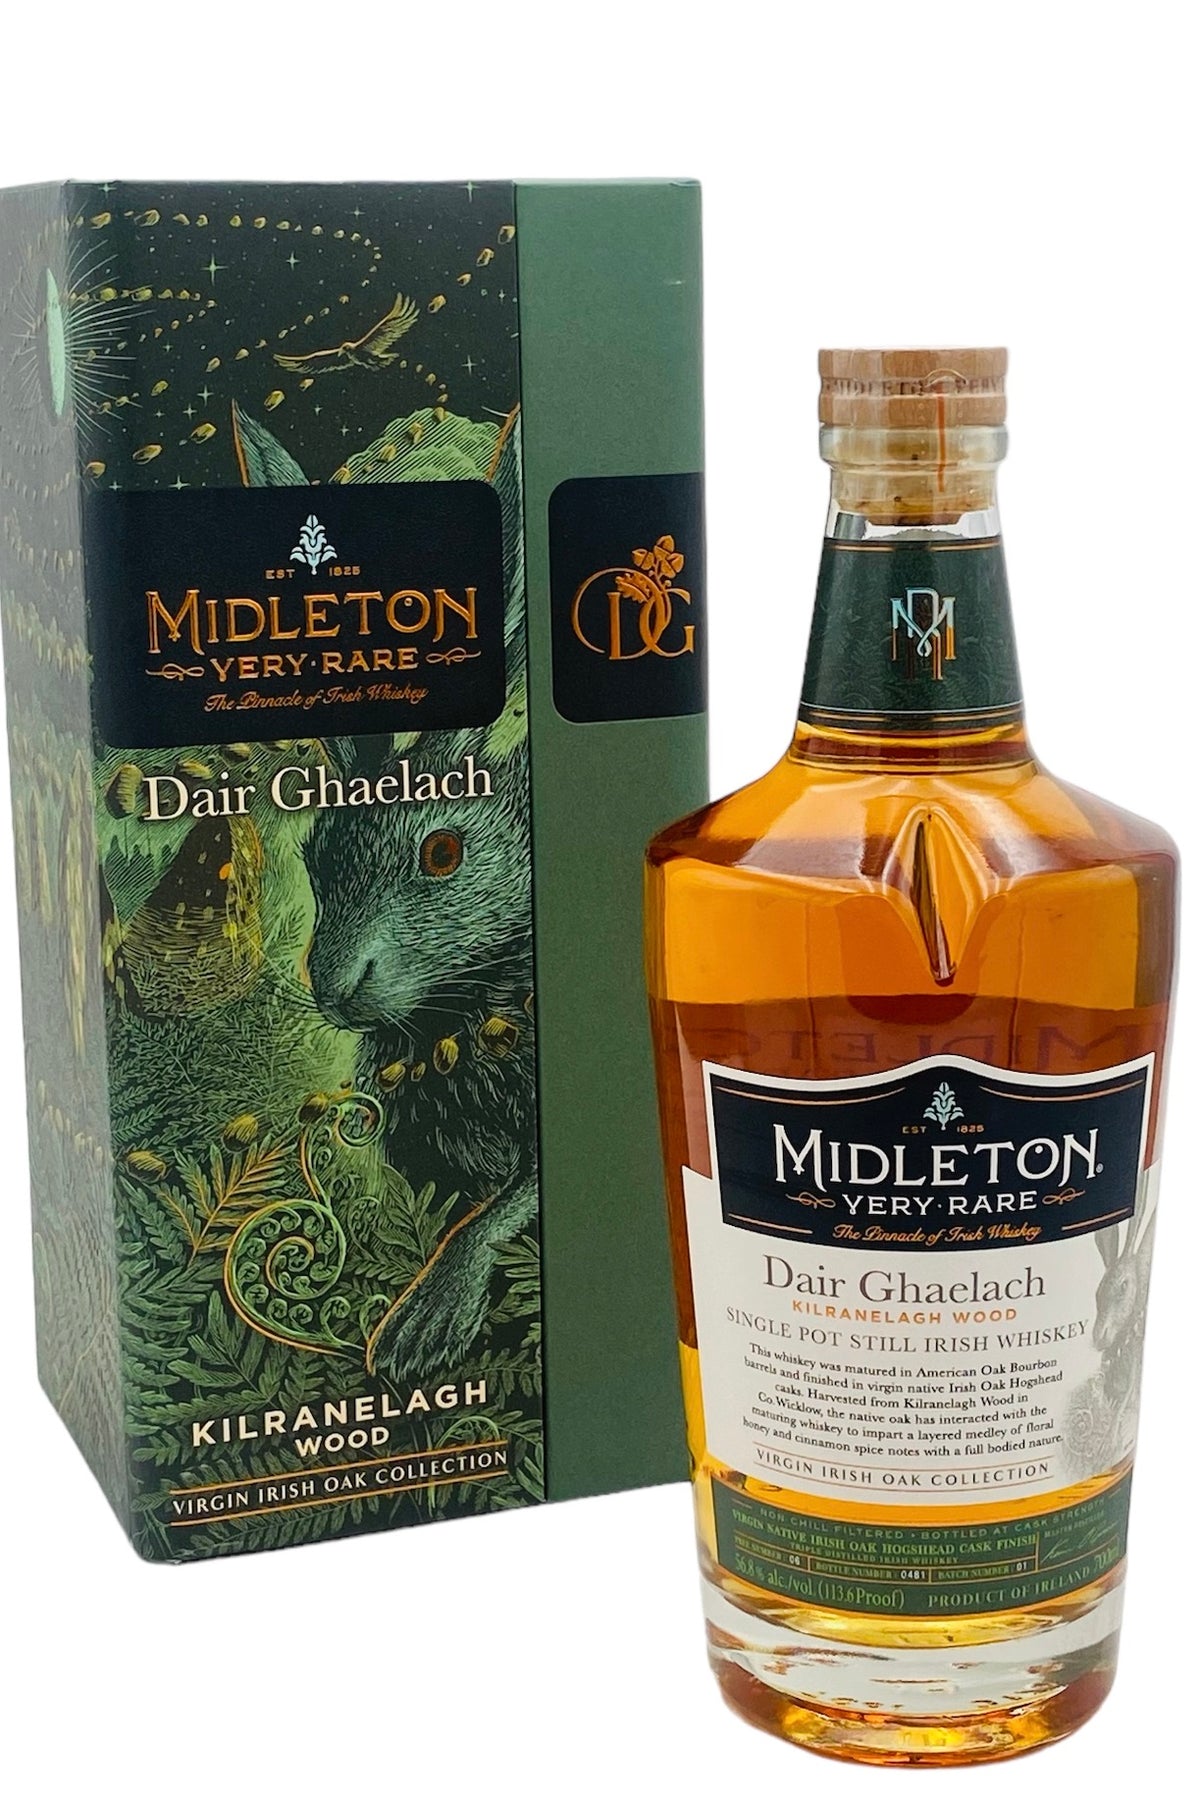 Midleton Dair Ghaelach Kilranelagh Wood Tree #6 Irish Whisky